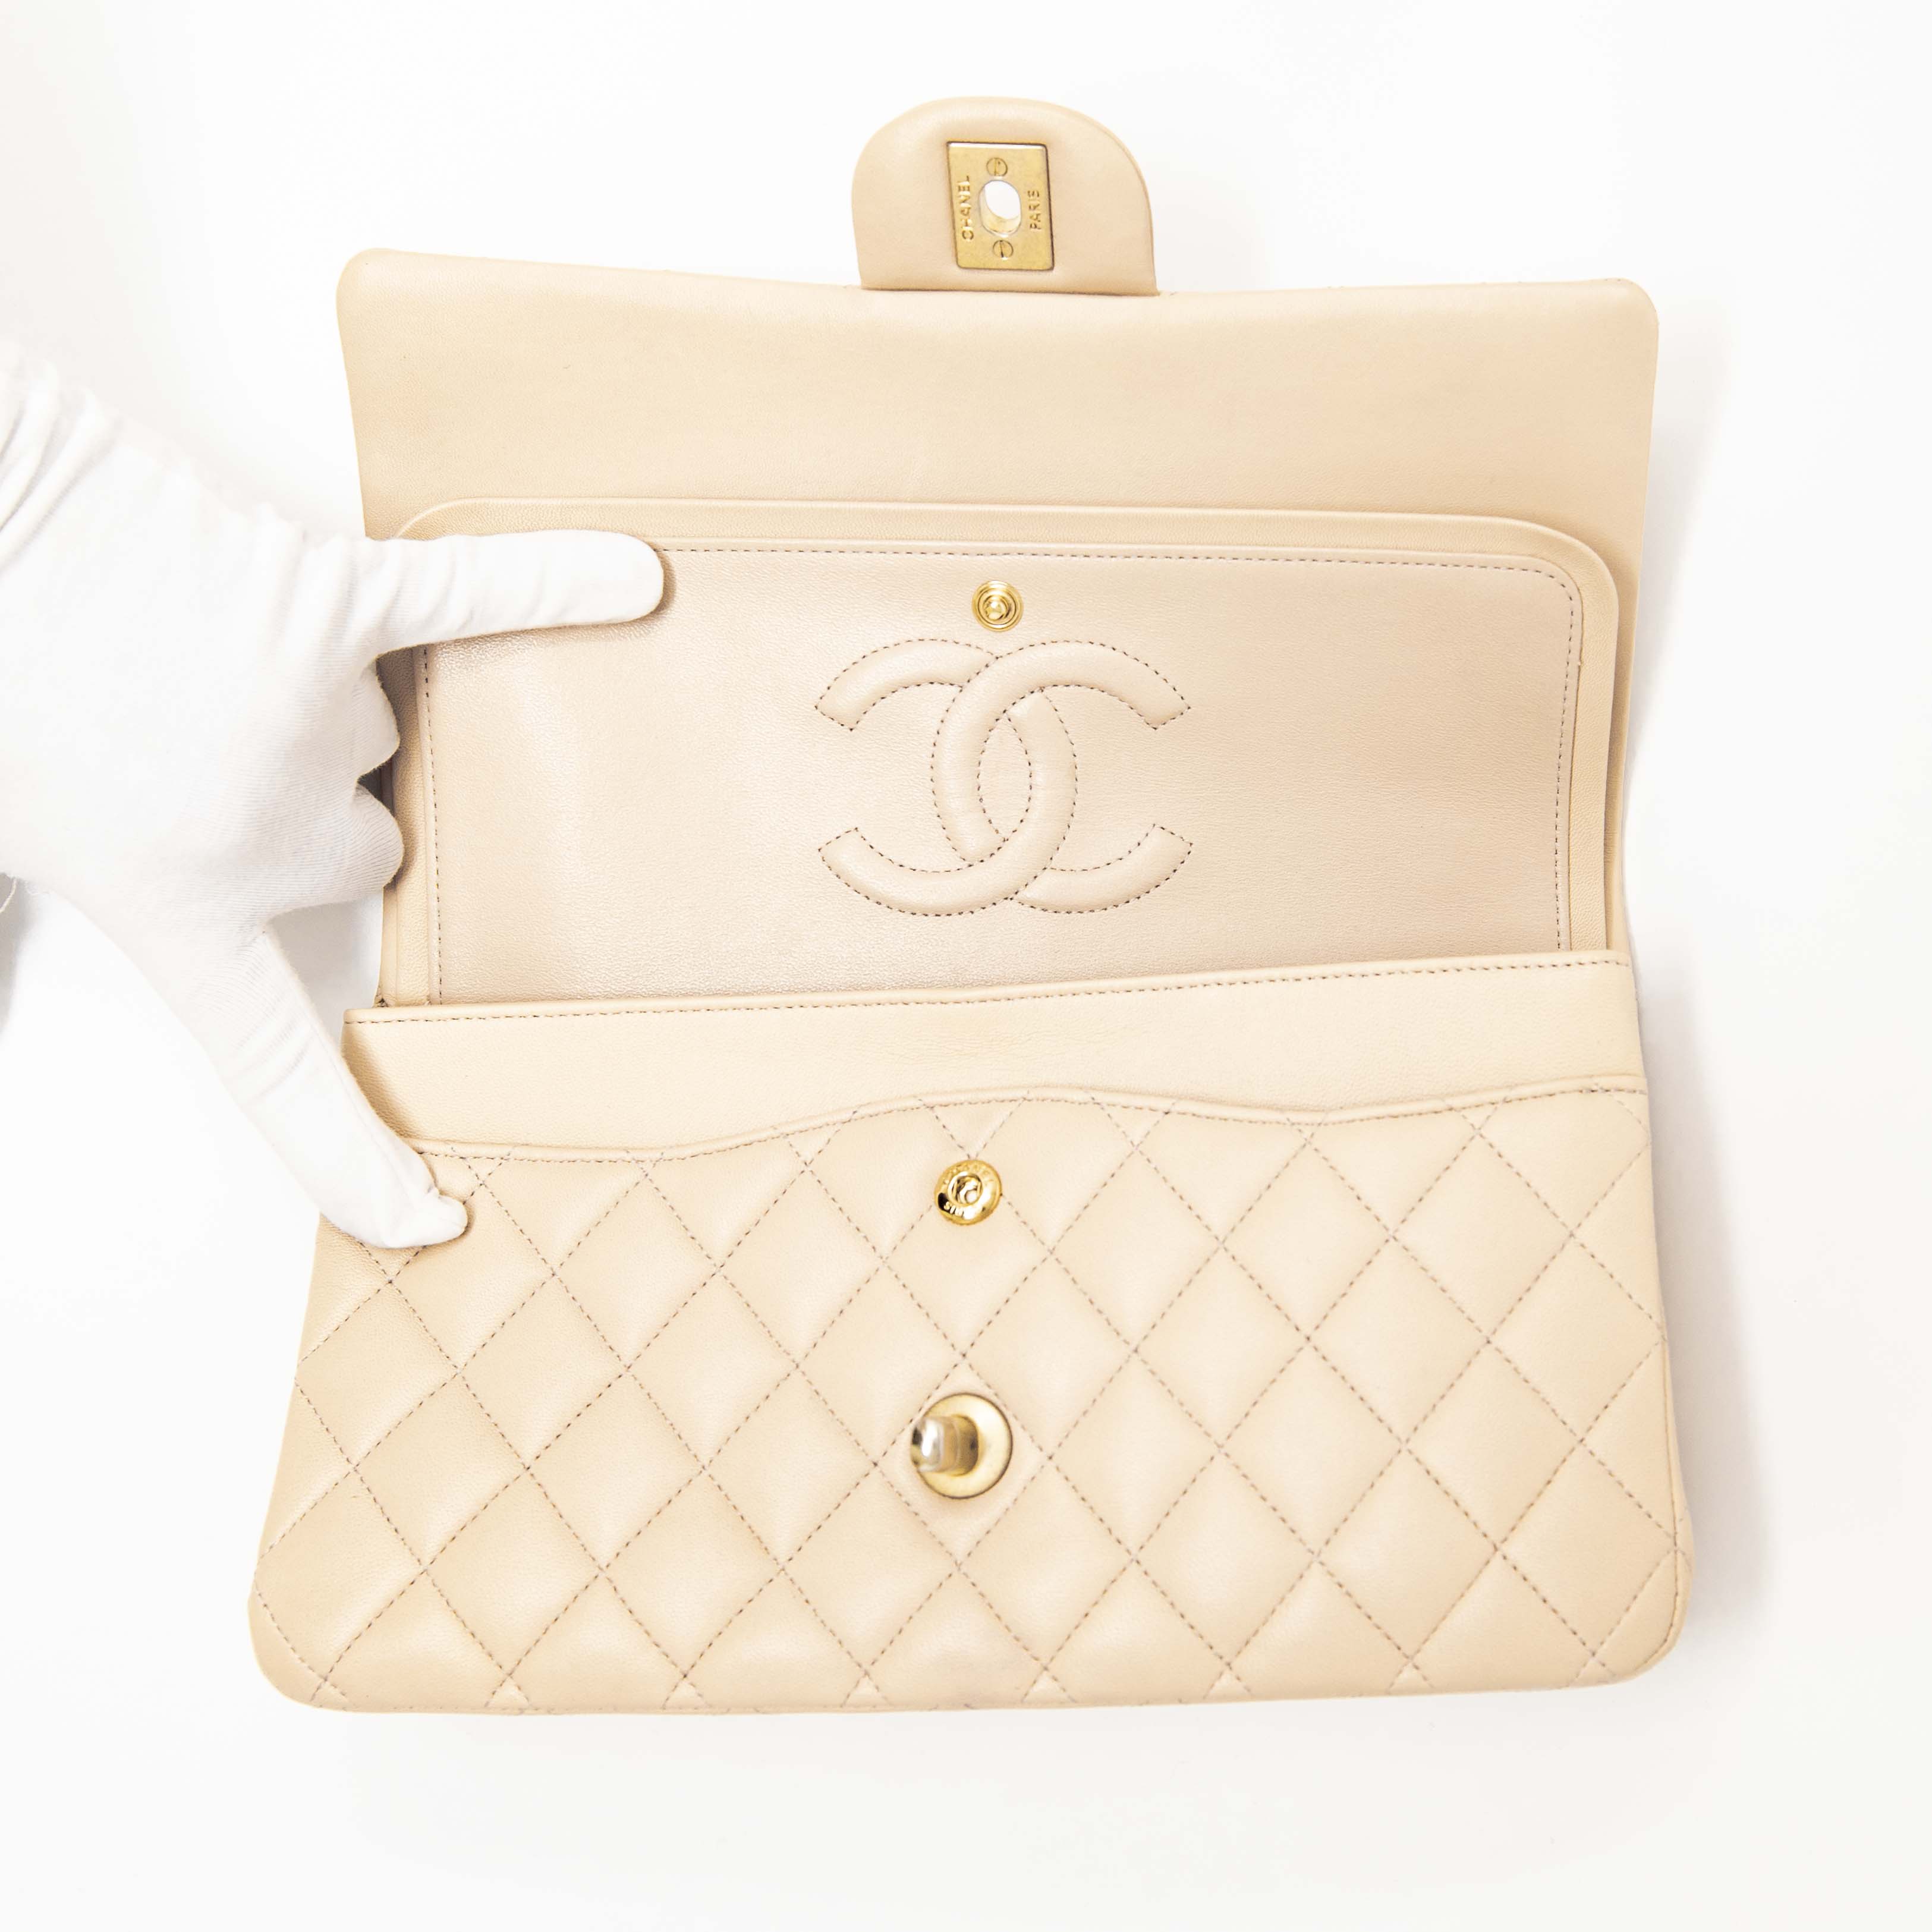 Chanel Beige Medium Classic Flap